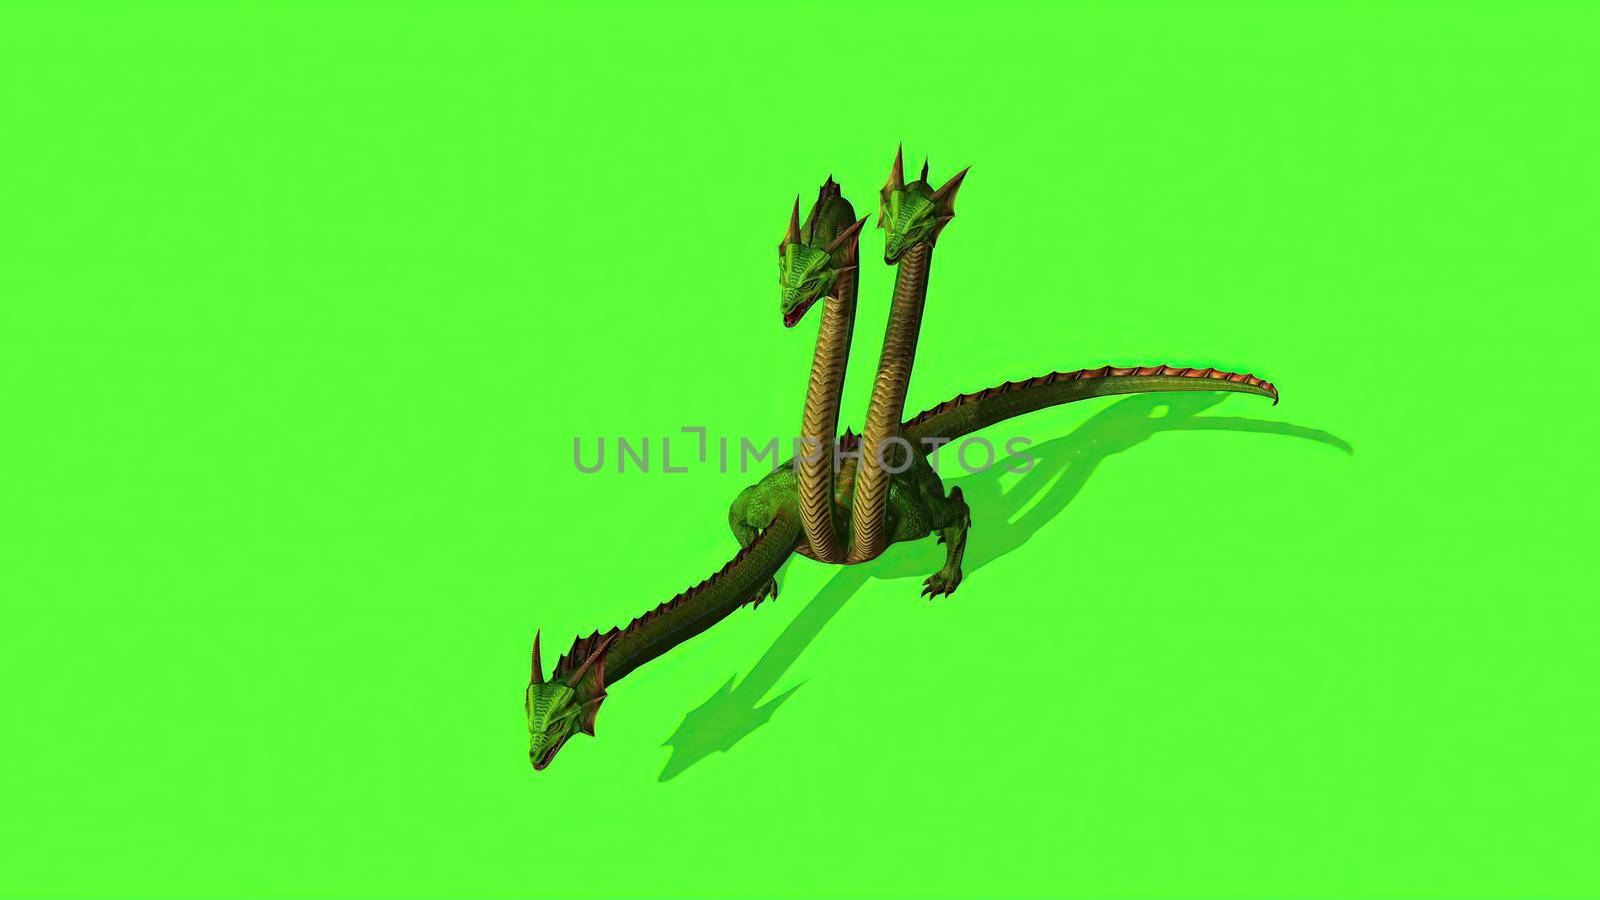 3d illustration - Hydra Mystical Water Snake  On Green Screen Background by vitanovski